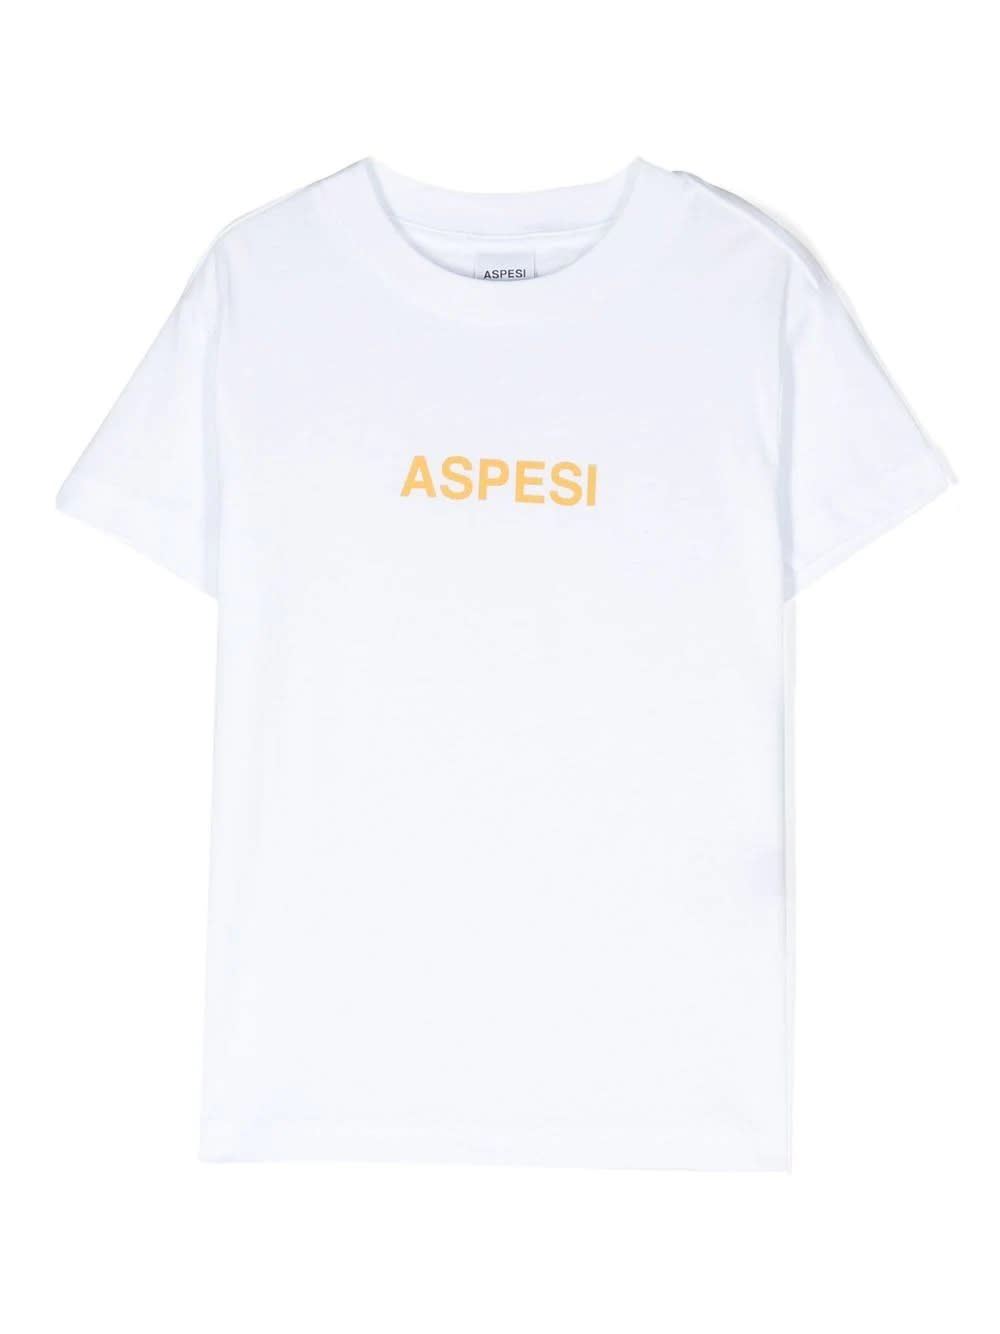 ASPESI WHITE T-SHIRT WITH ASPESI PRINT